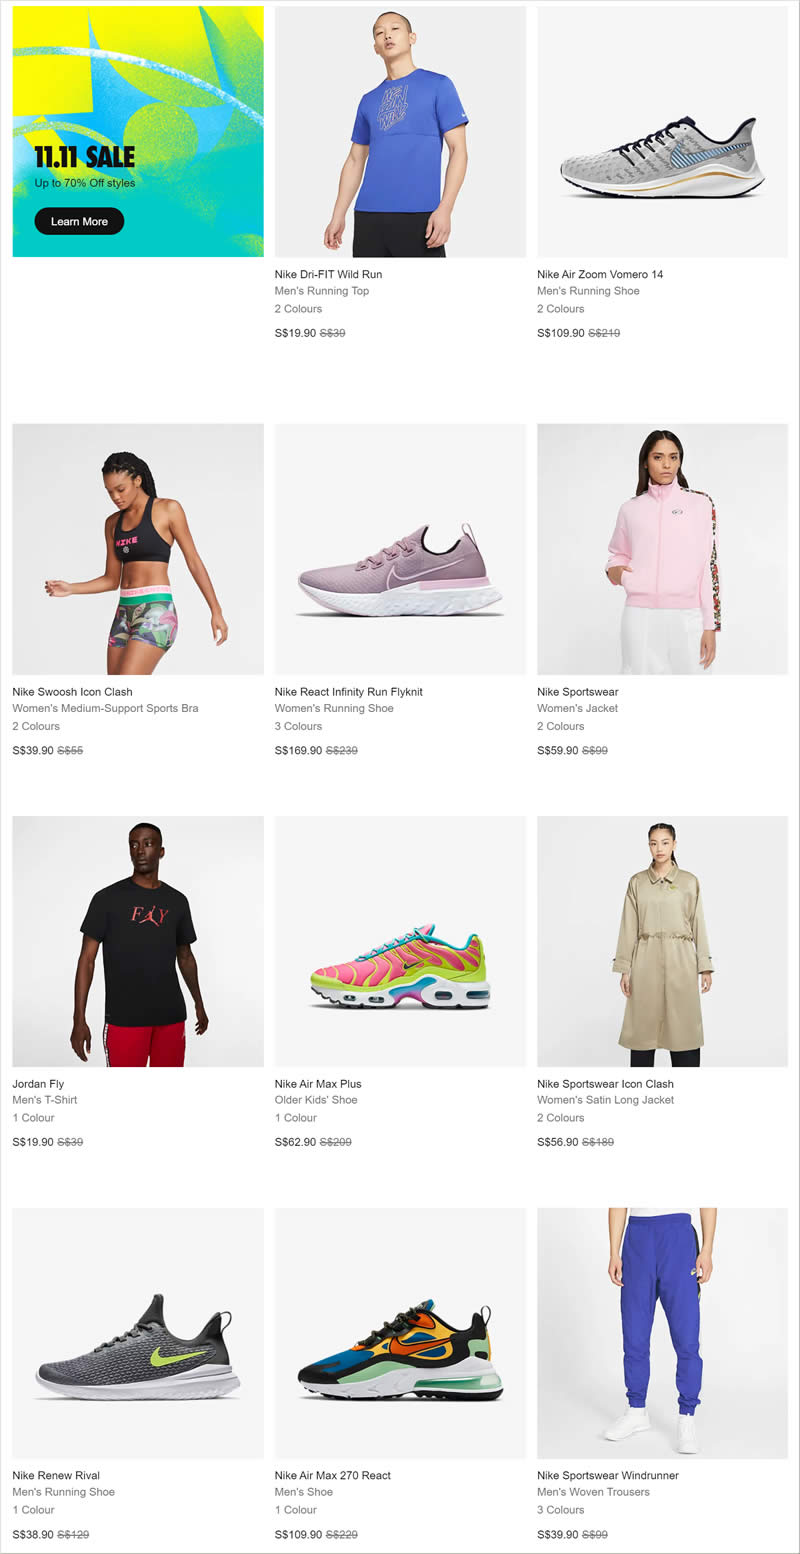 Nike 11.11 online sale offers discounts 